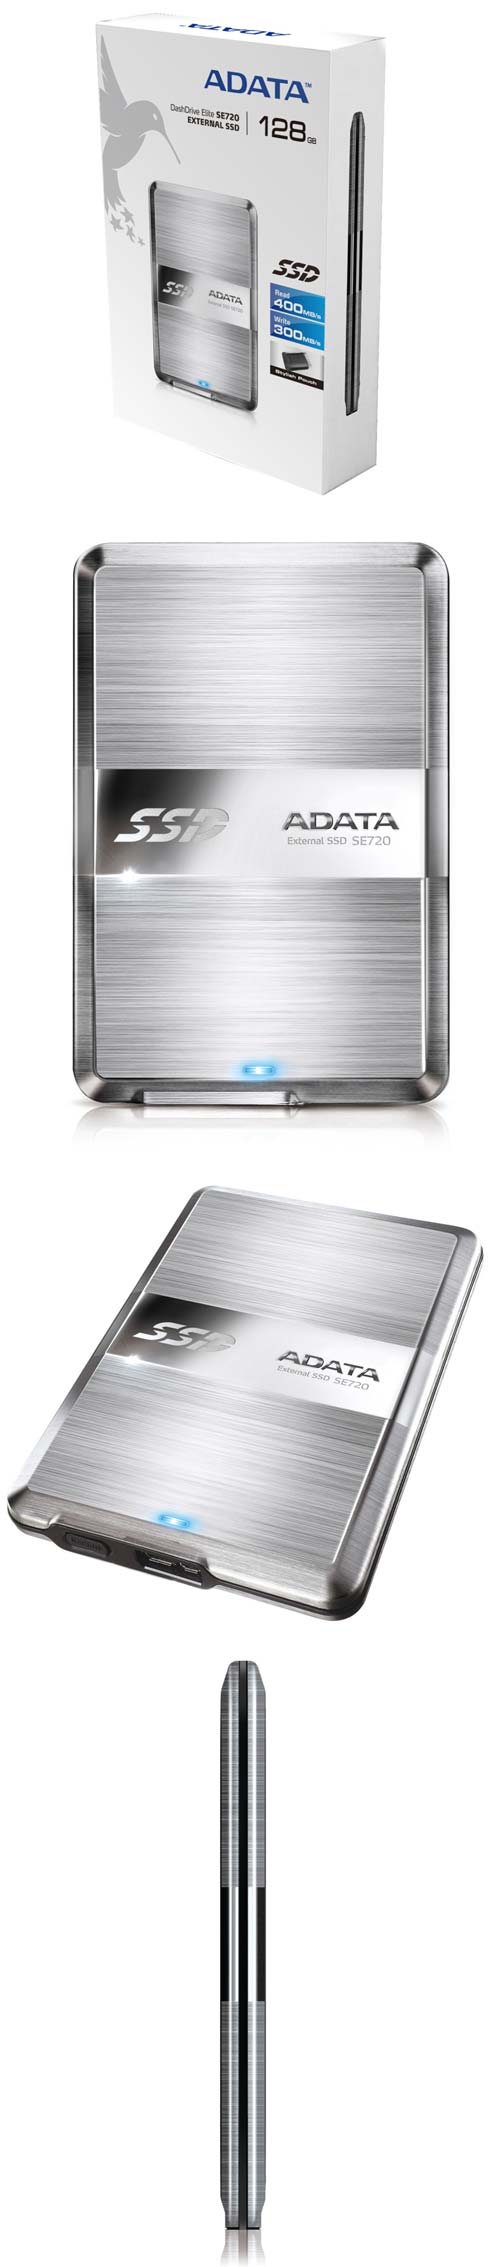 Новые фото устройства ADATA DashDrive Elite SE720